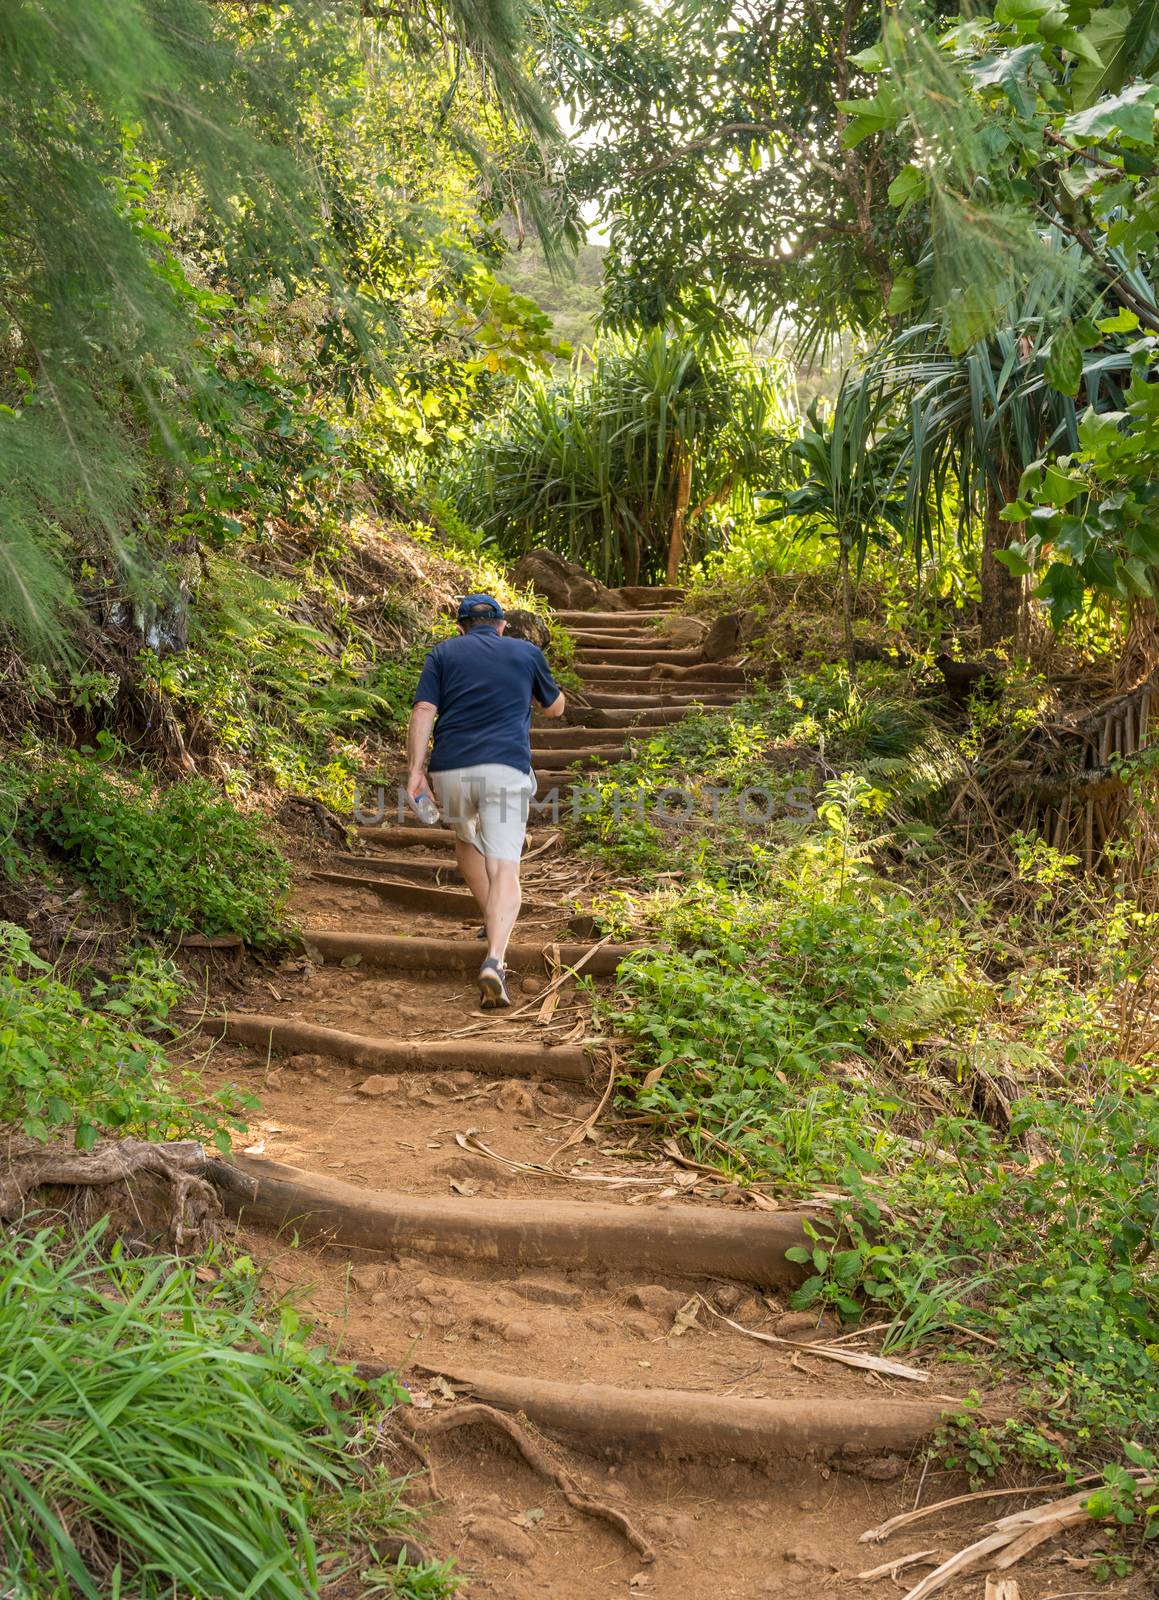 Steep steps in the dirt path of Kalalau trail on Na Pali coast of Kauai by steheap